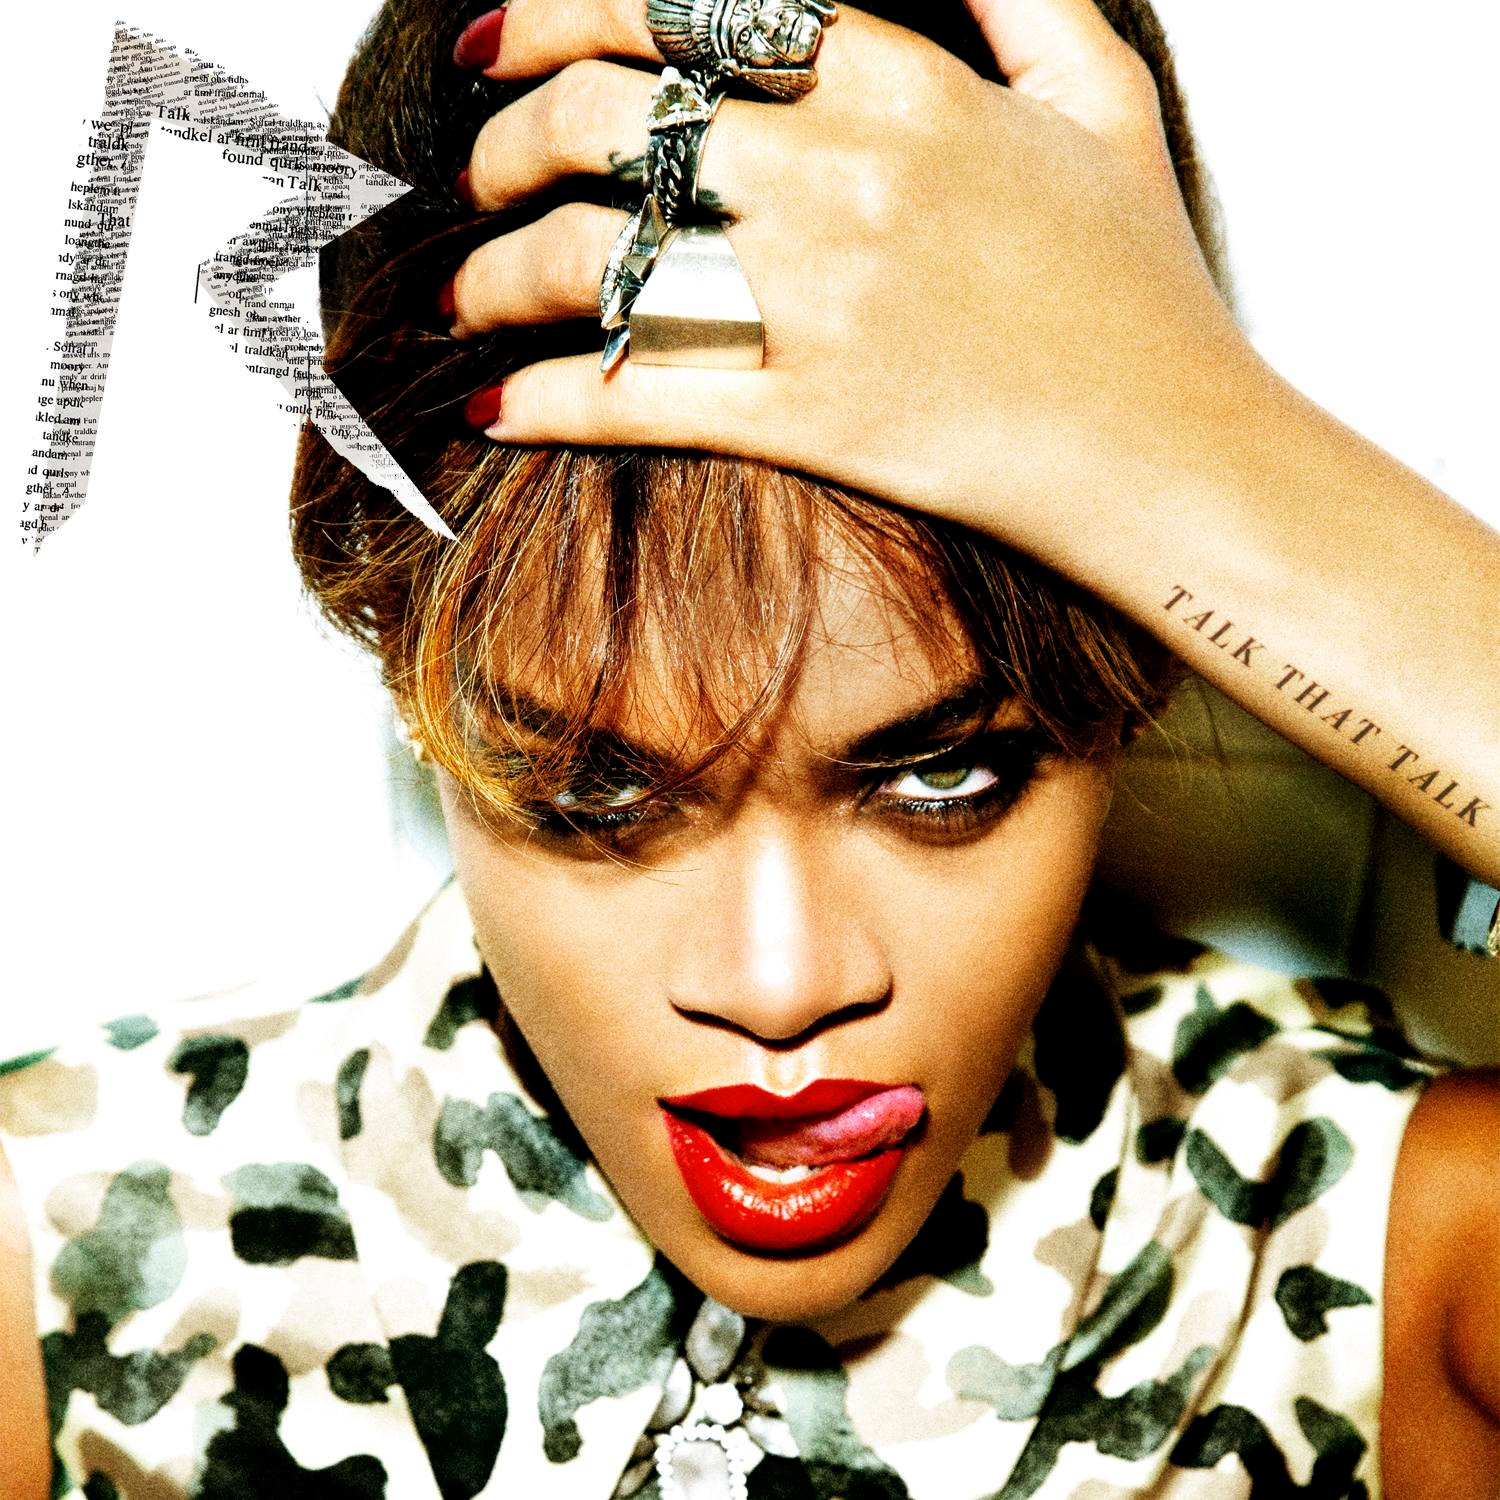 http://1.bp.blogspot.com/-Lzn-KRgkRjw/TubN_BCj_cI/AAAAAAAAADA/JfaI1Uh71Nc/s1600/Rihanna.jpg